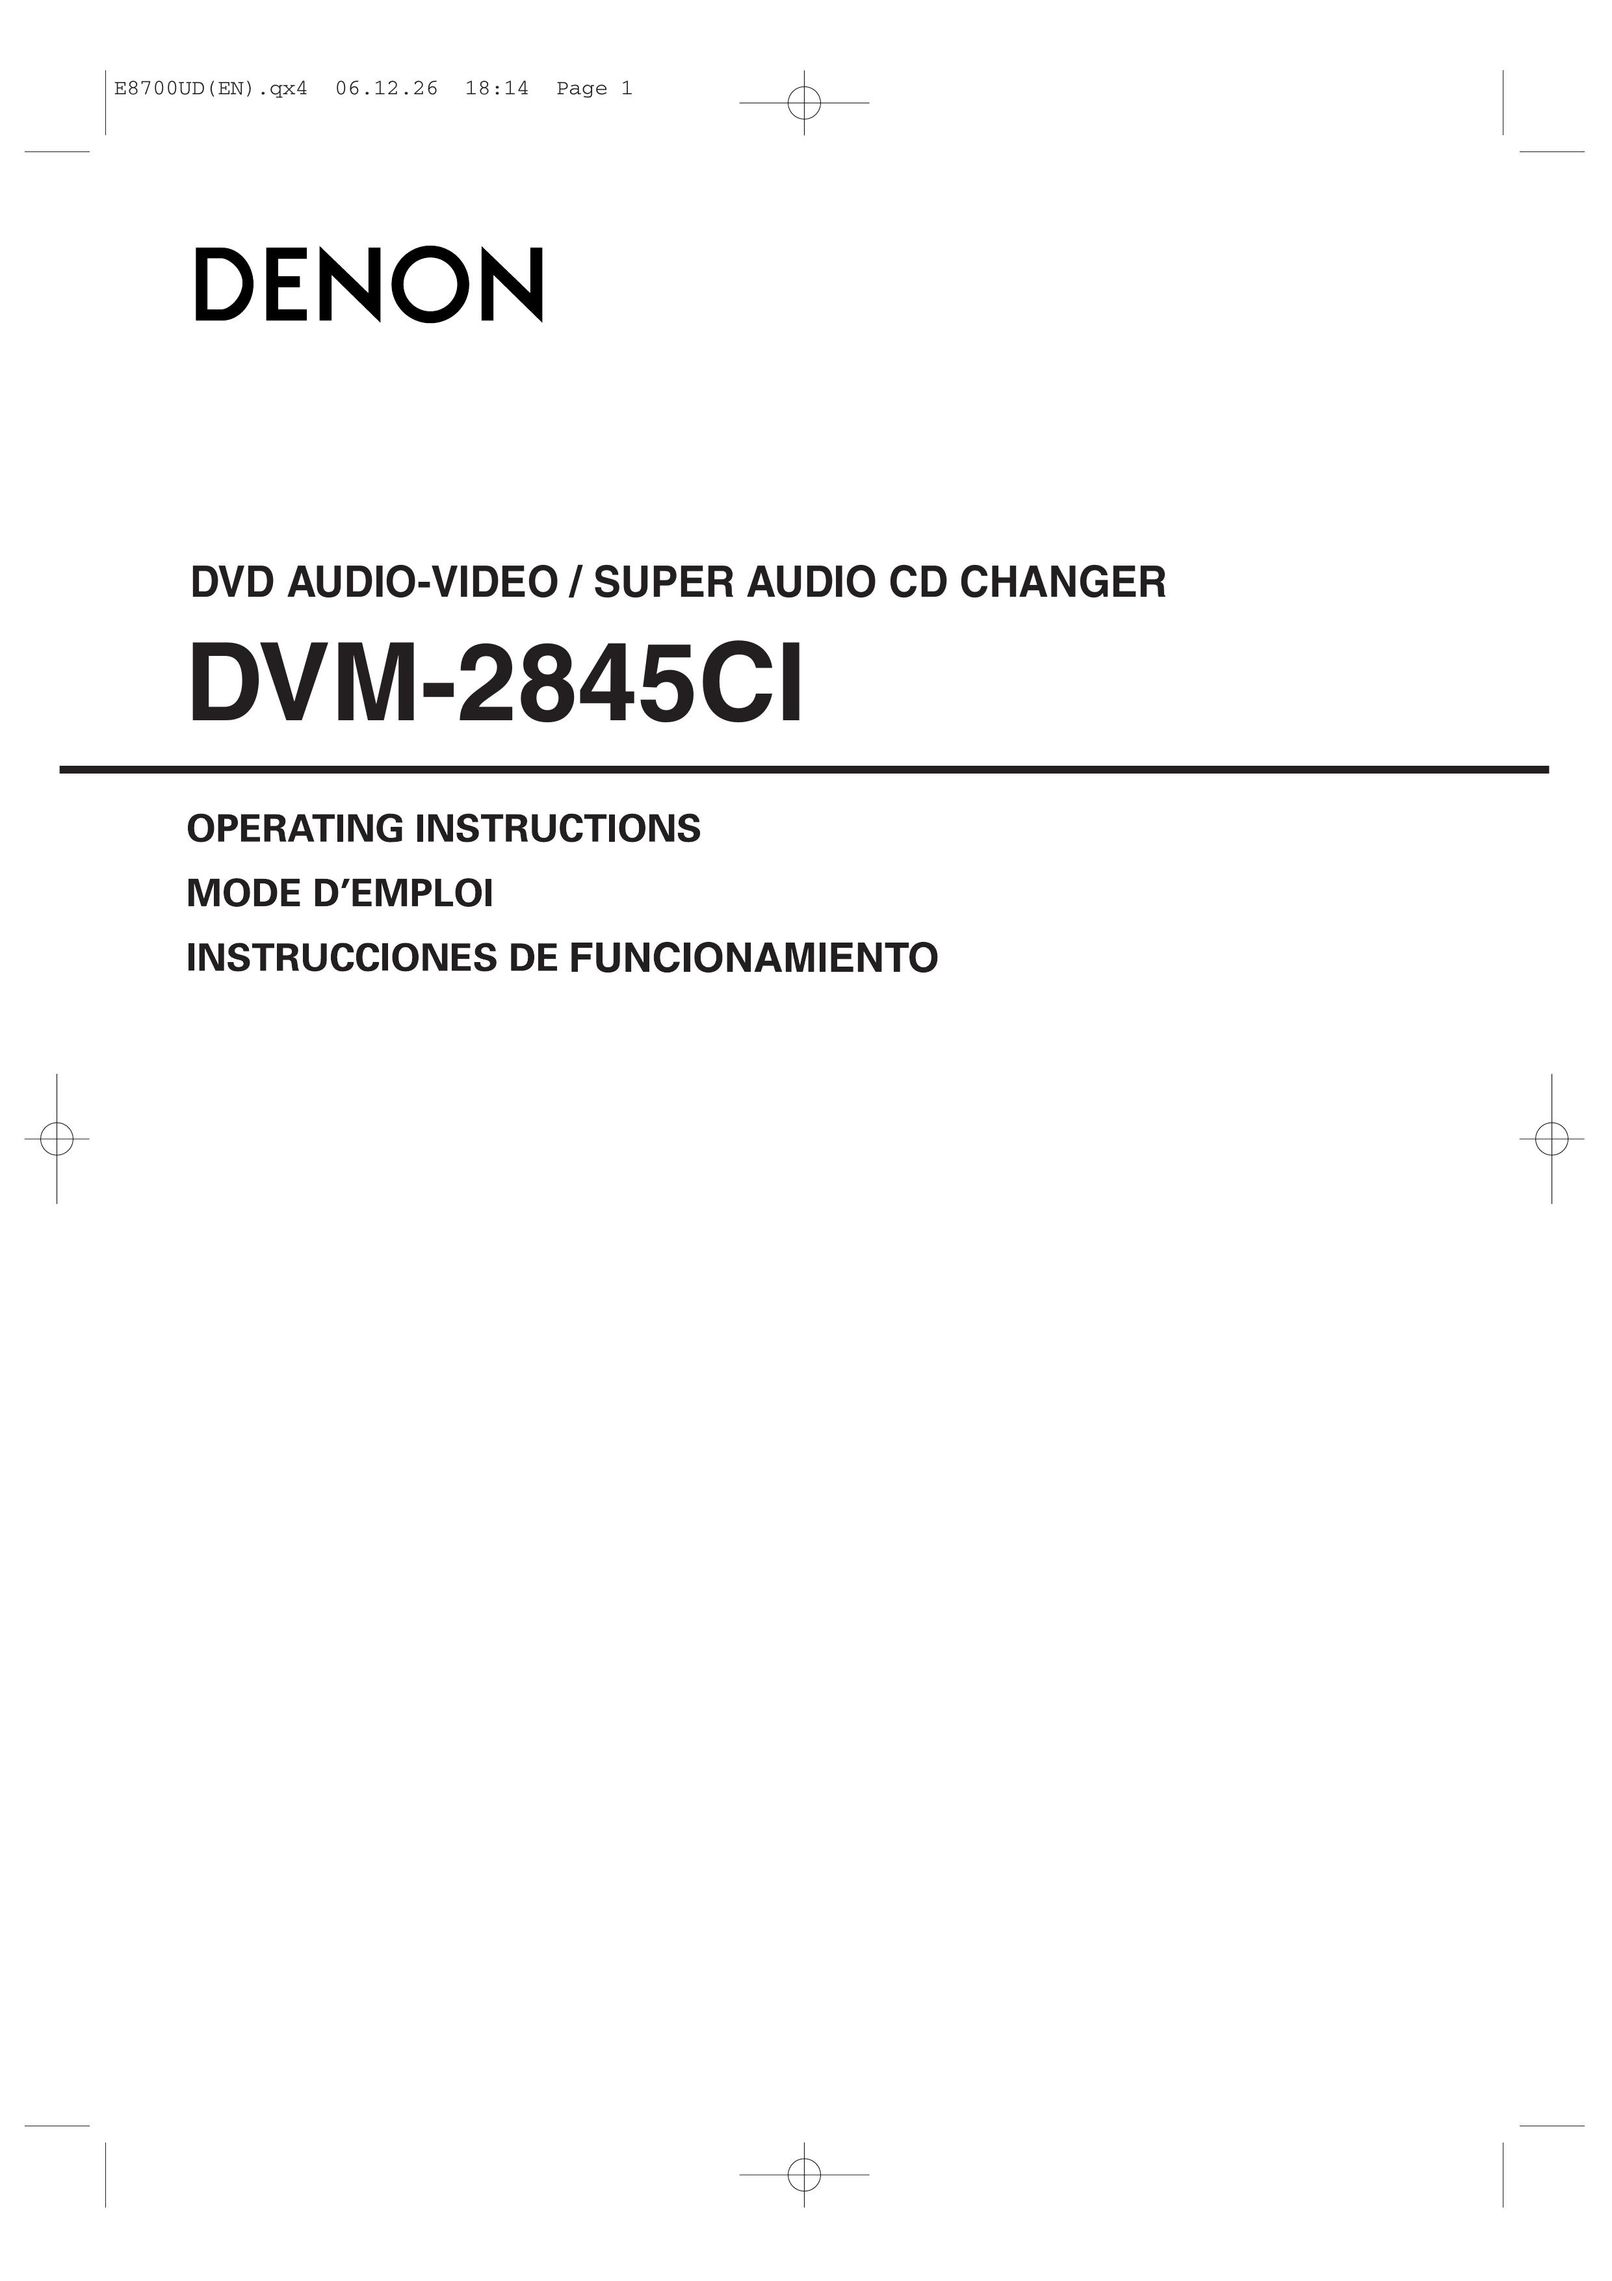 Denon DVM-2845CI CD Player User Manual